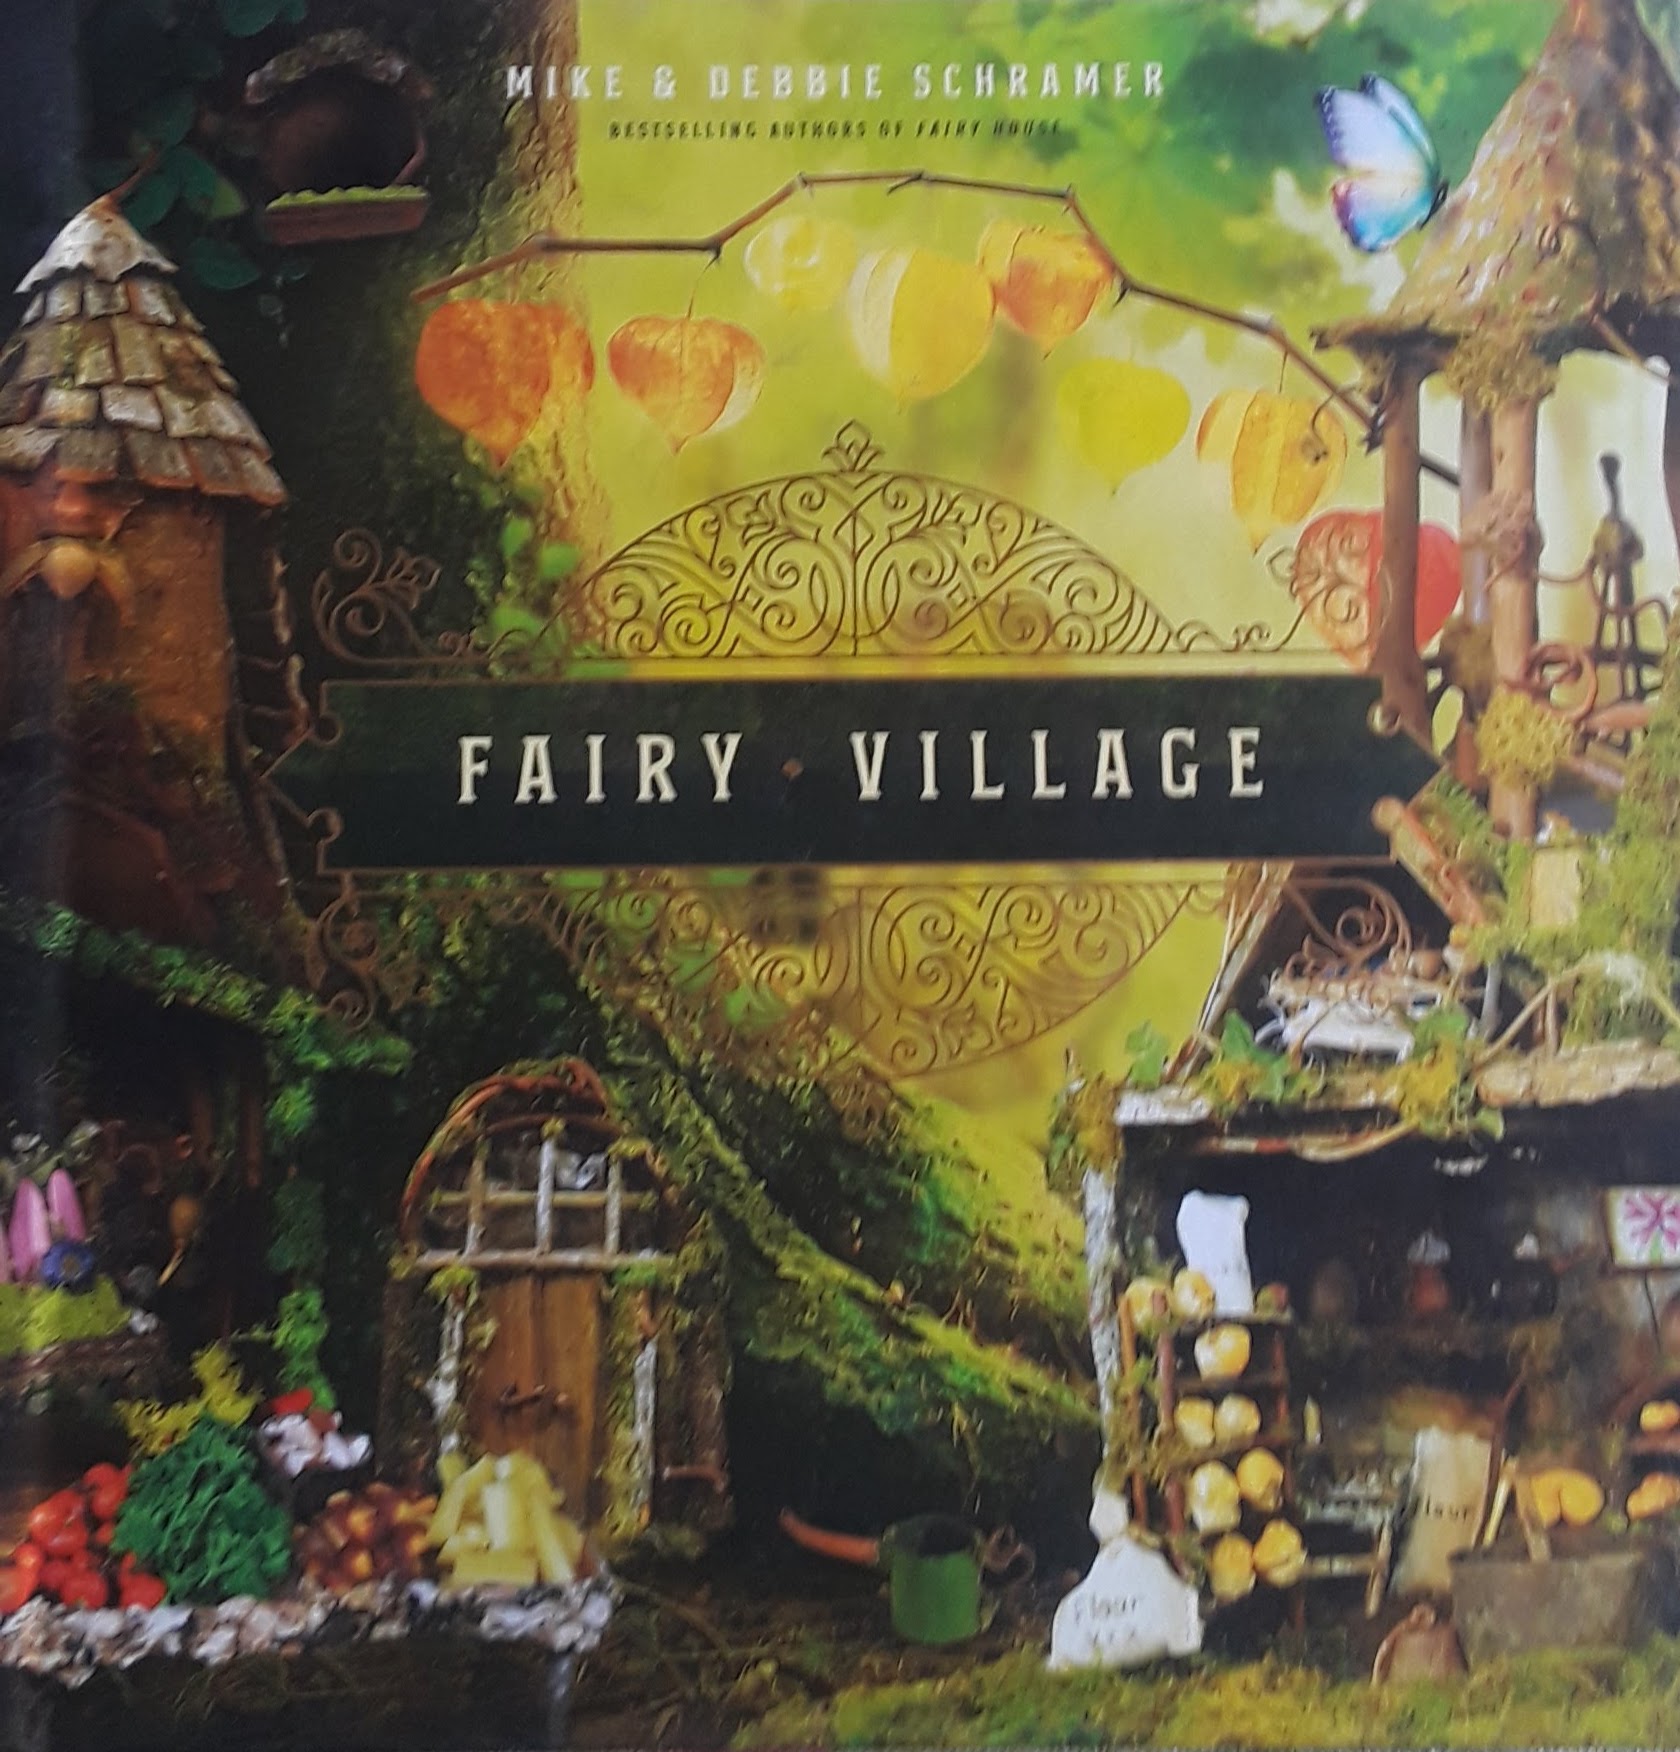 Fairy Village by Debbie and Mike Schramer